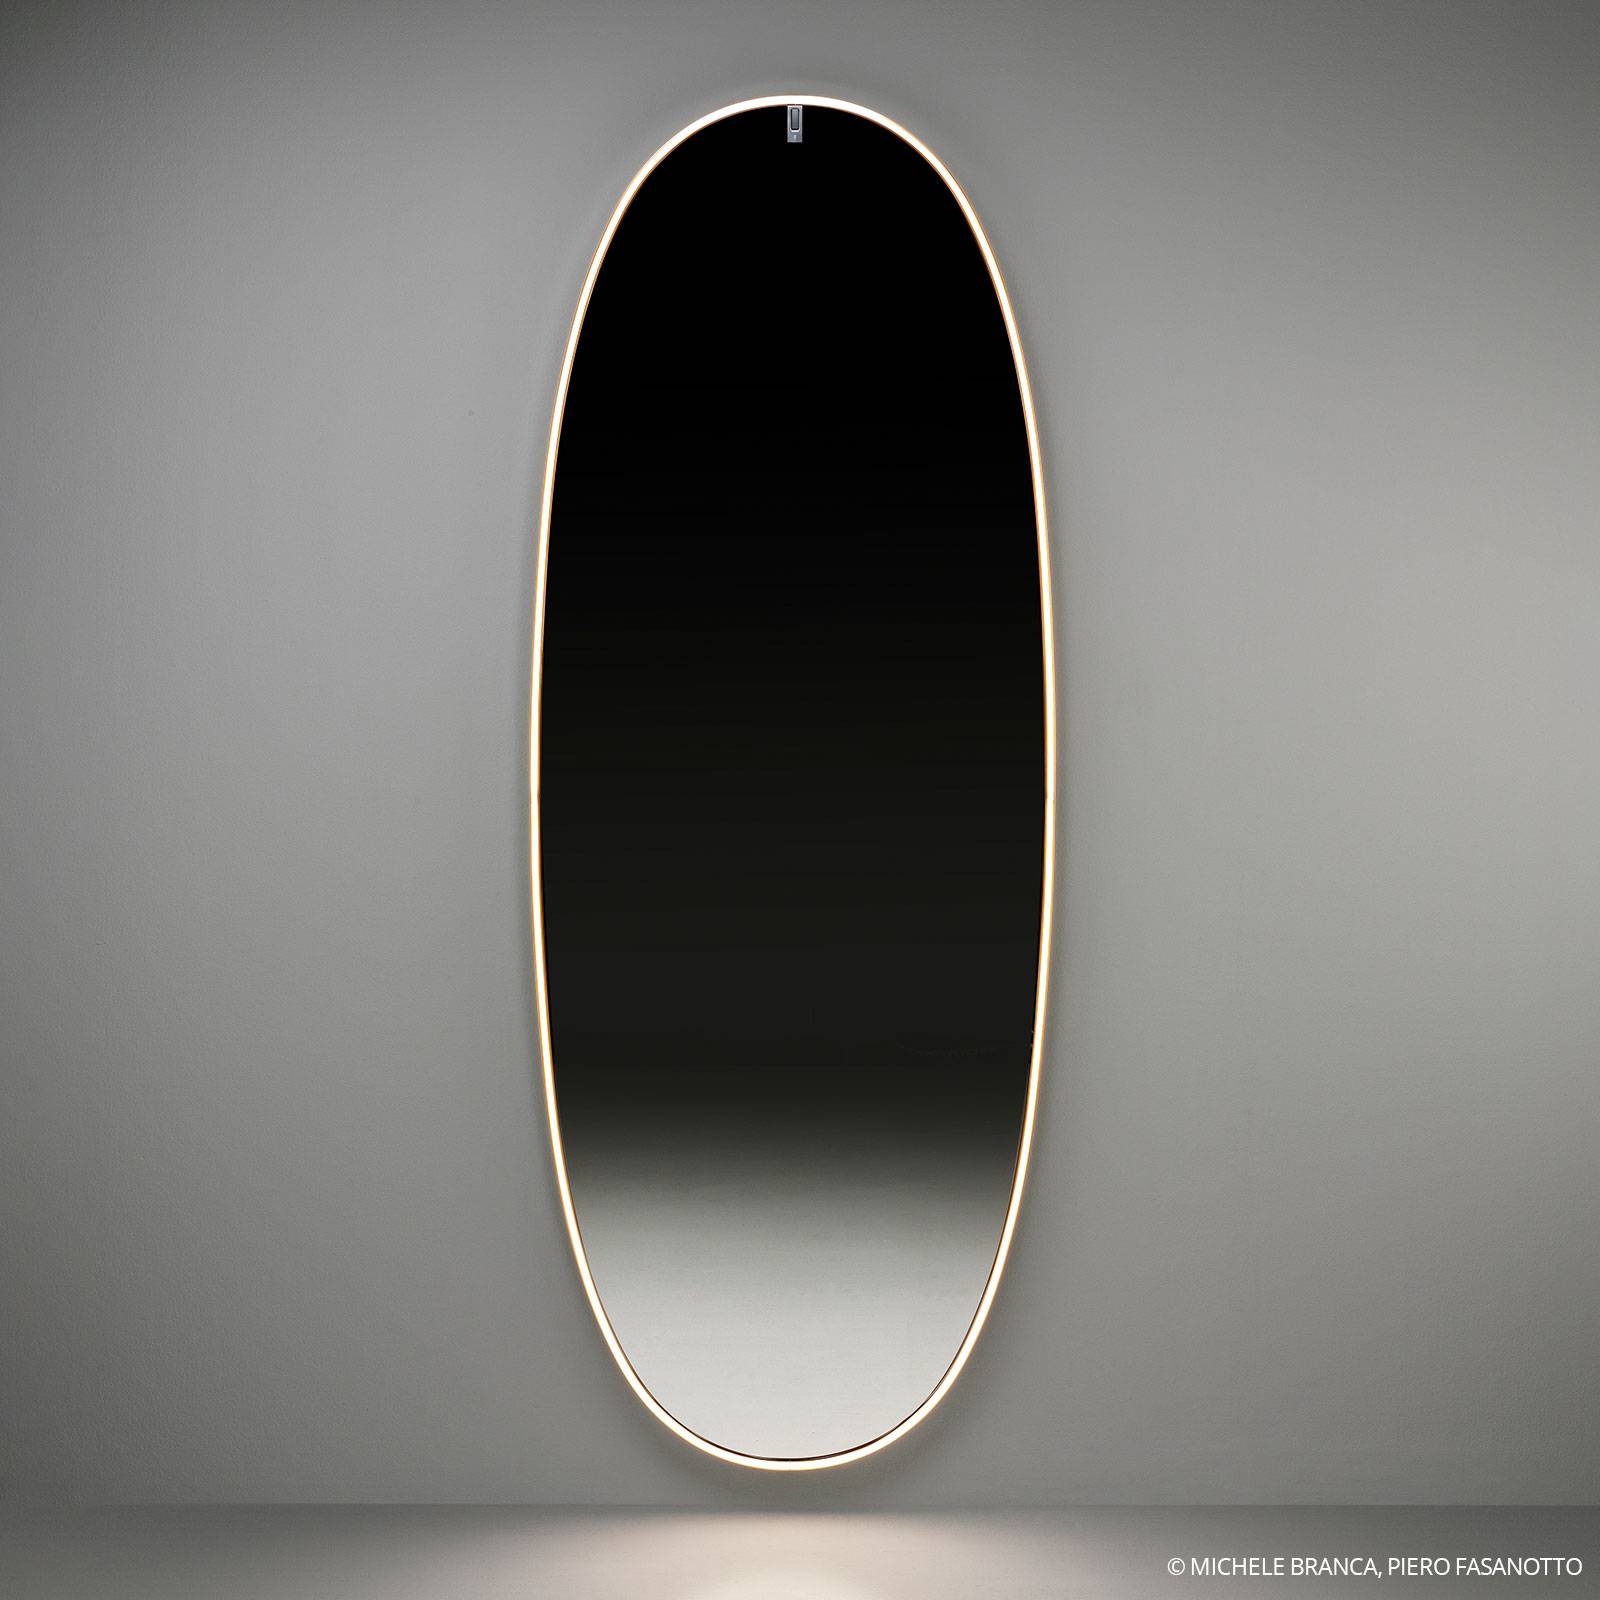 FLOS La Plus Belle specchio LED, oro spazzolato